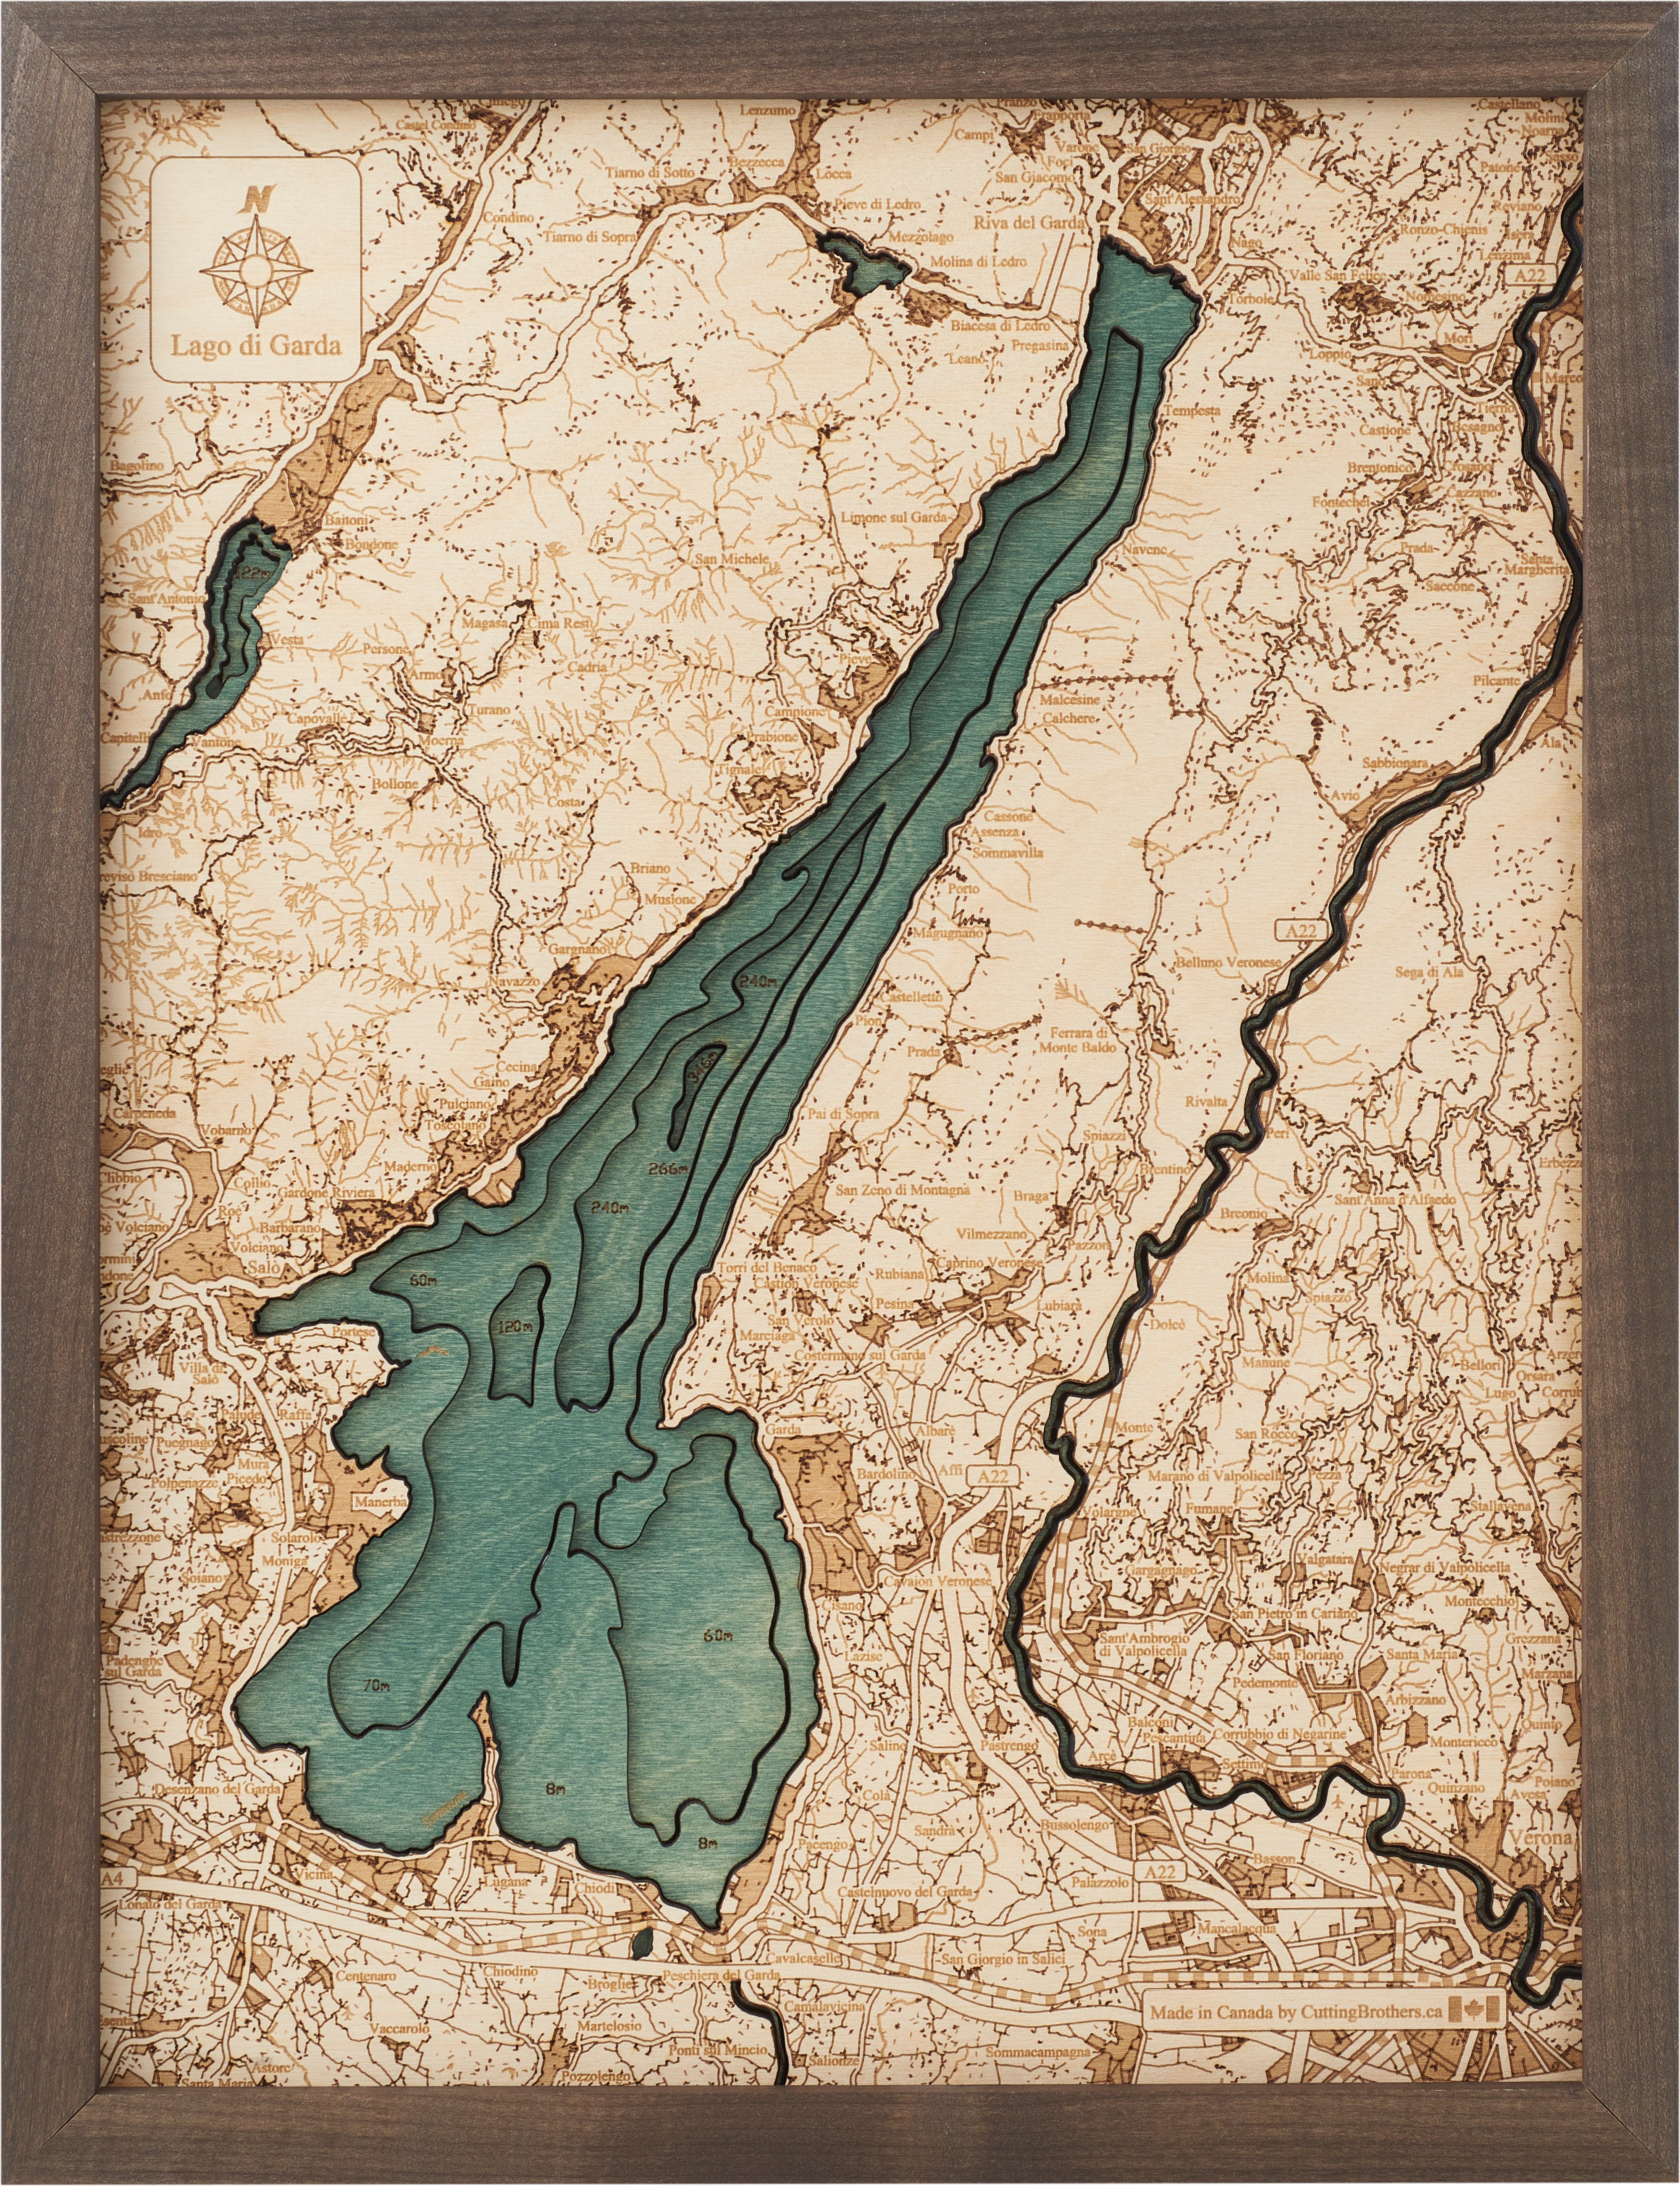 LAKE GARDA 3D Wooden Wall Map - Version S 